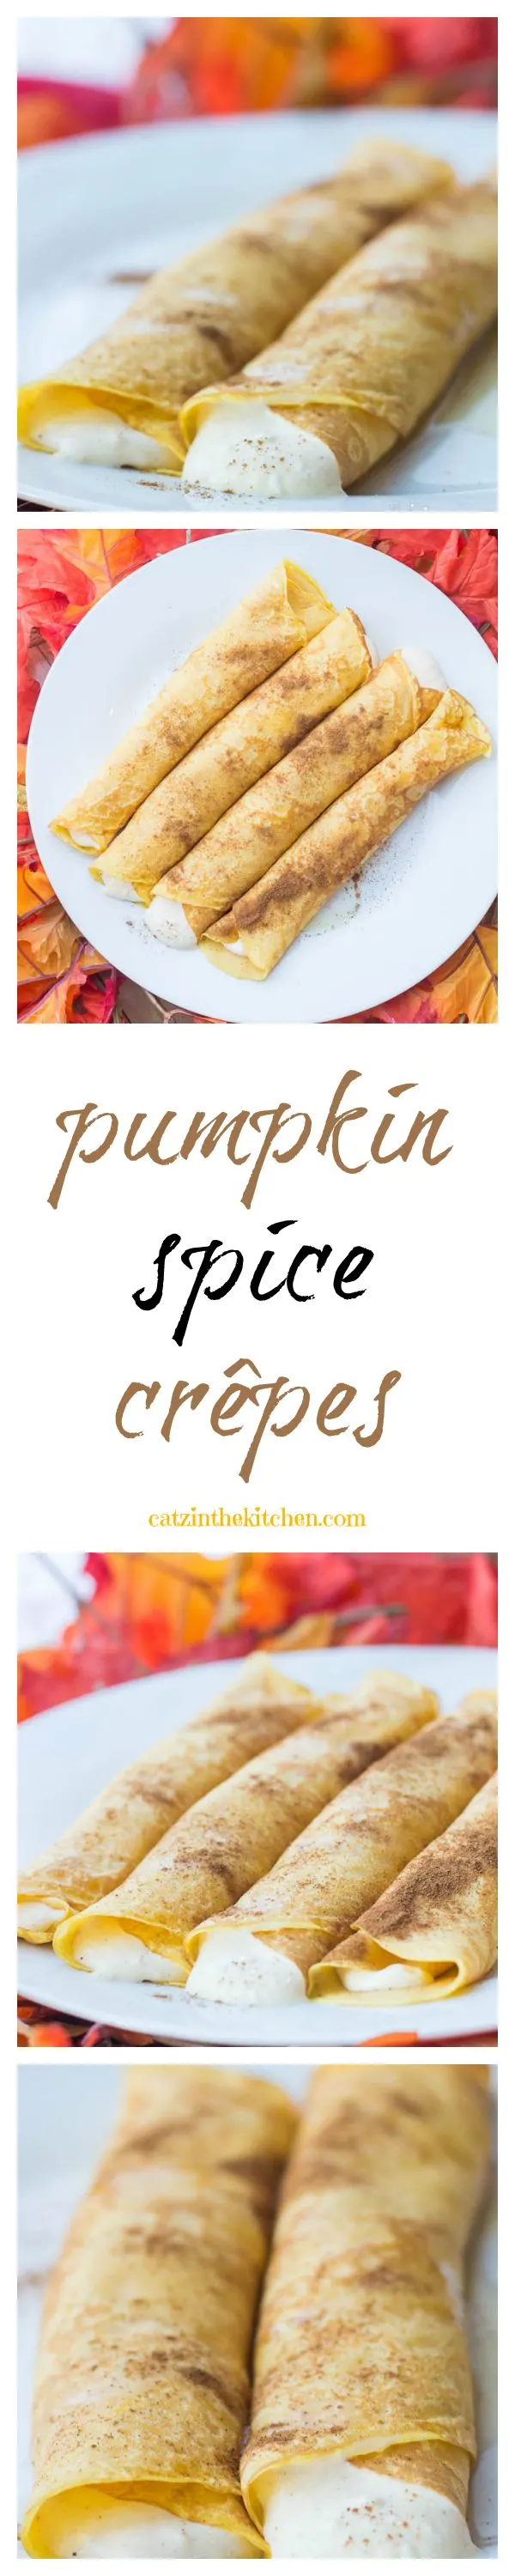 Pumpkin Spice Crêpes | Catz in the Kitchen | catzinthekitchen.com | #crepes #fall #pumpkin